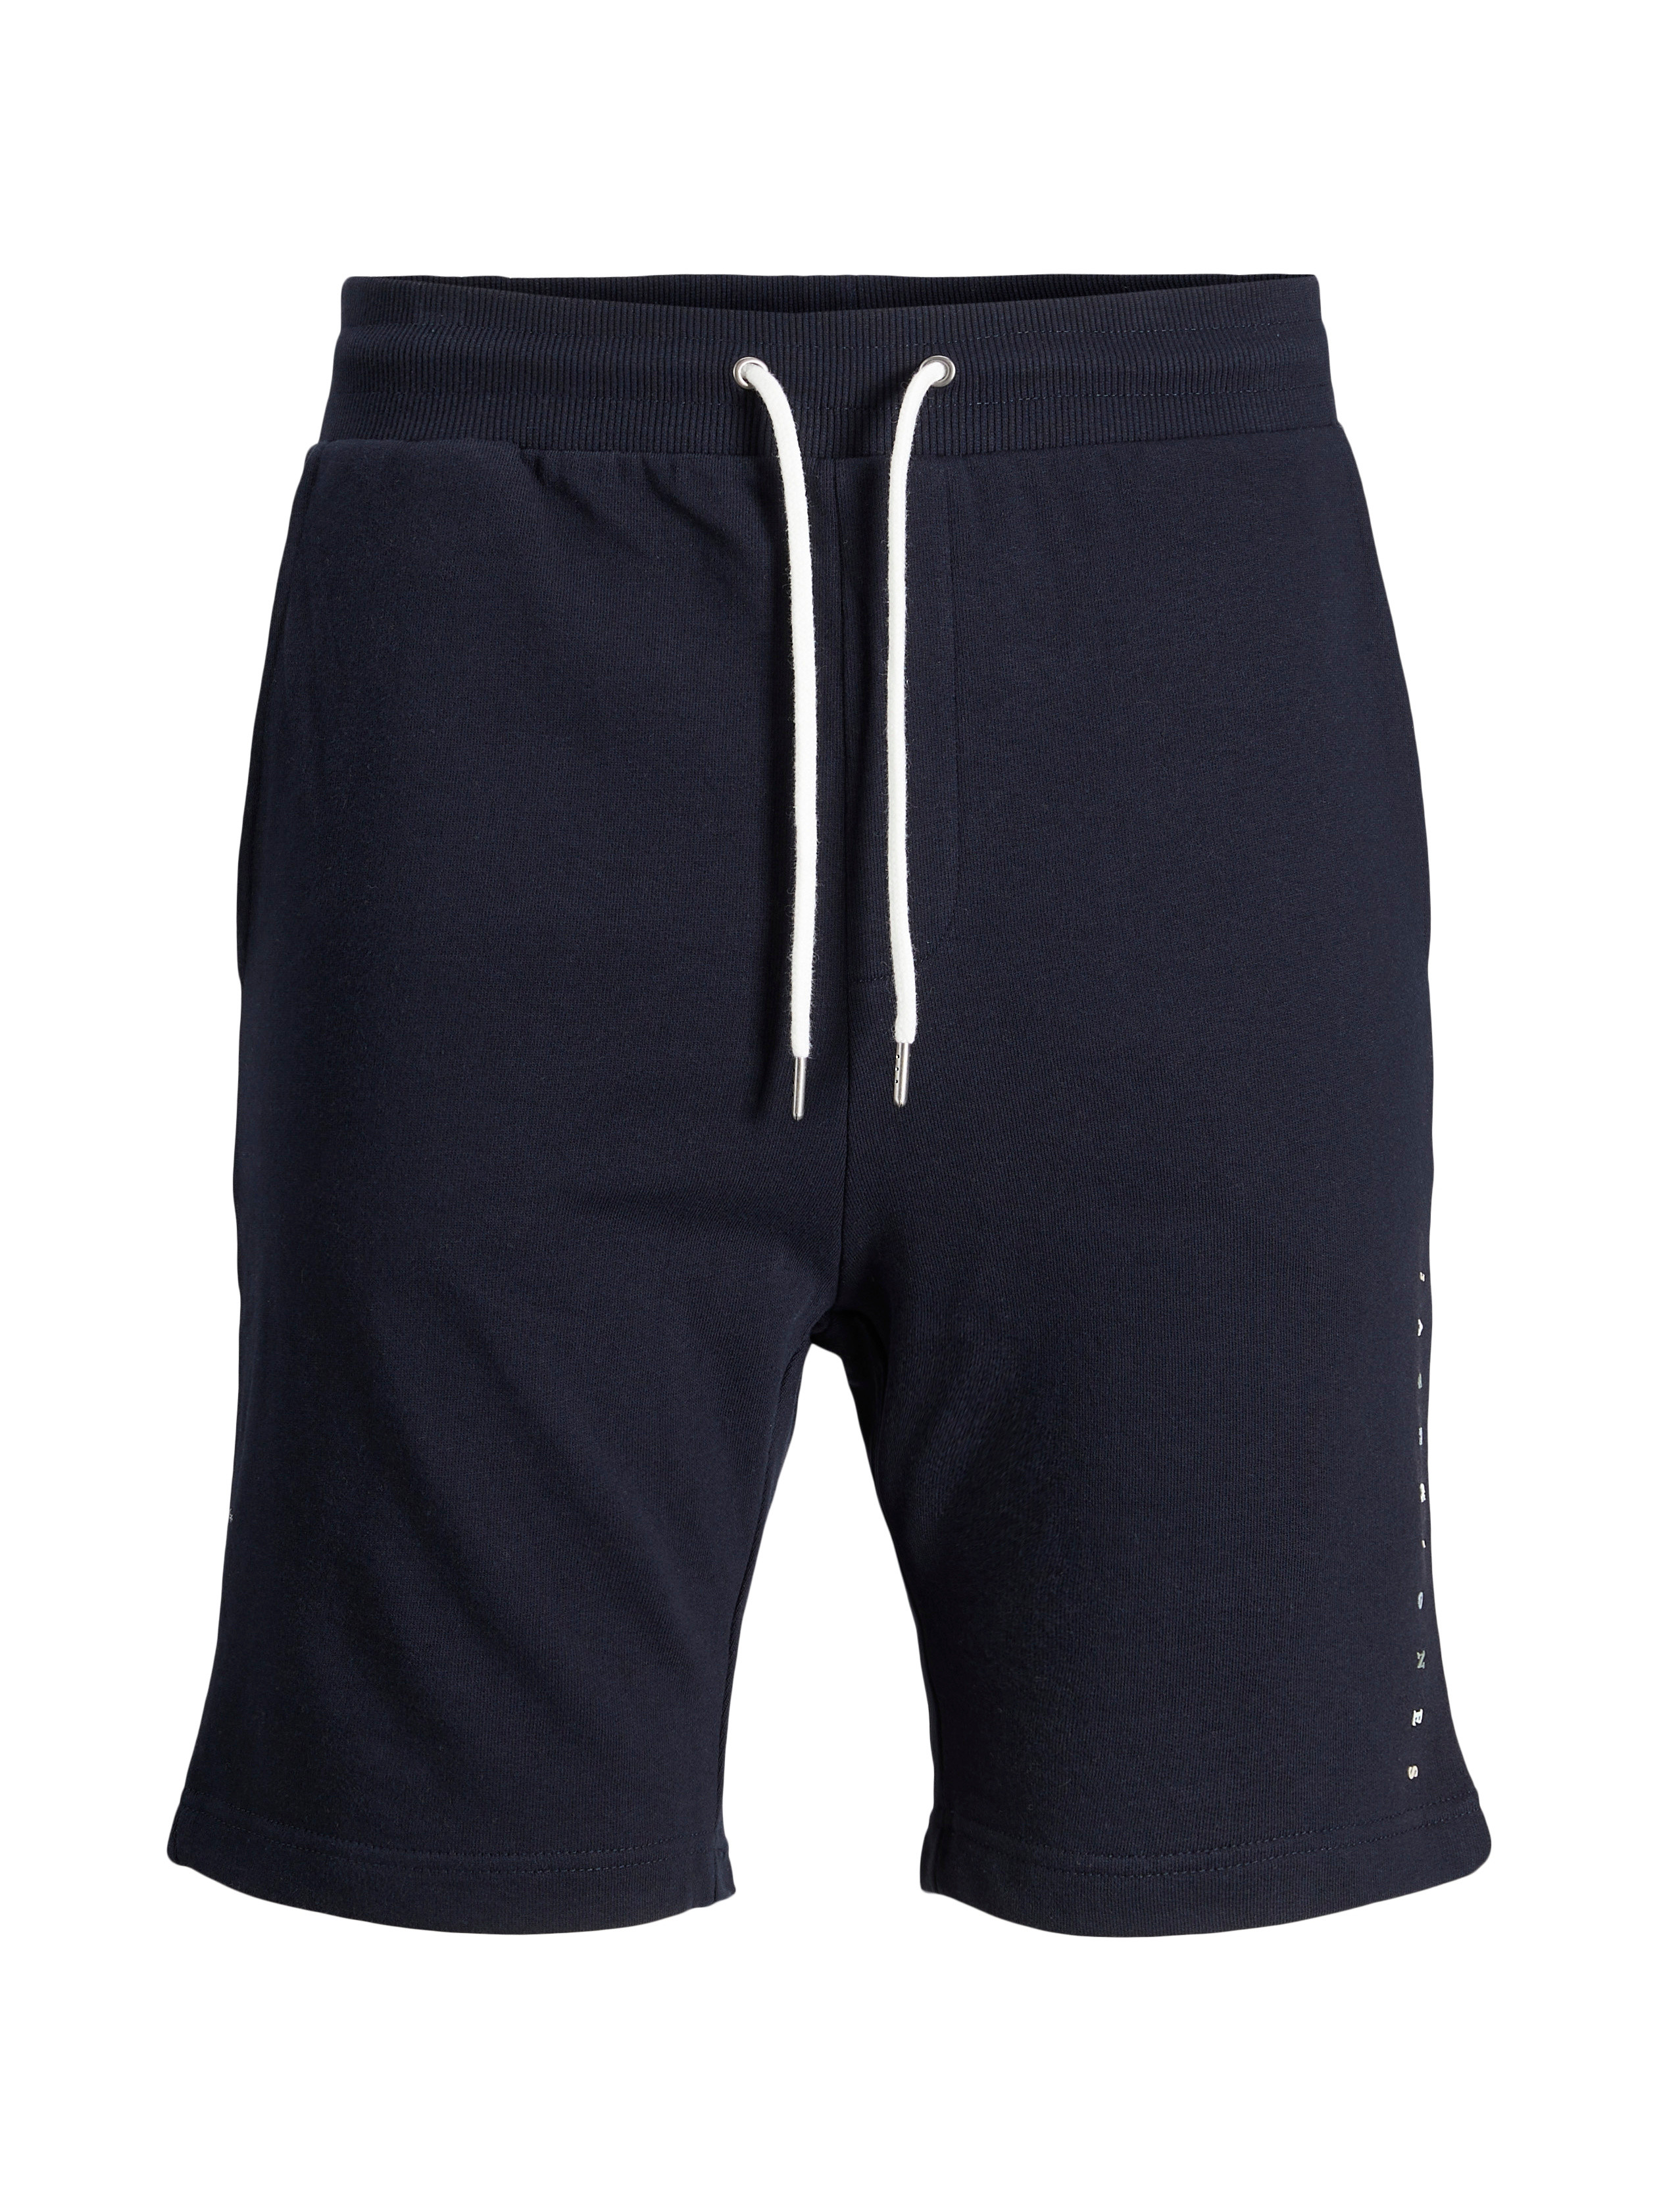 Shorts, Dark Blue, large image number 0